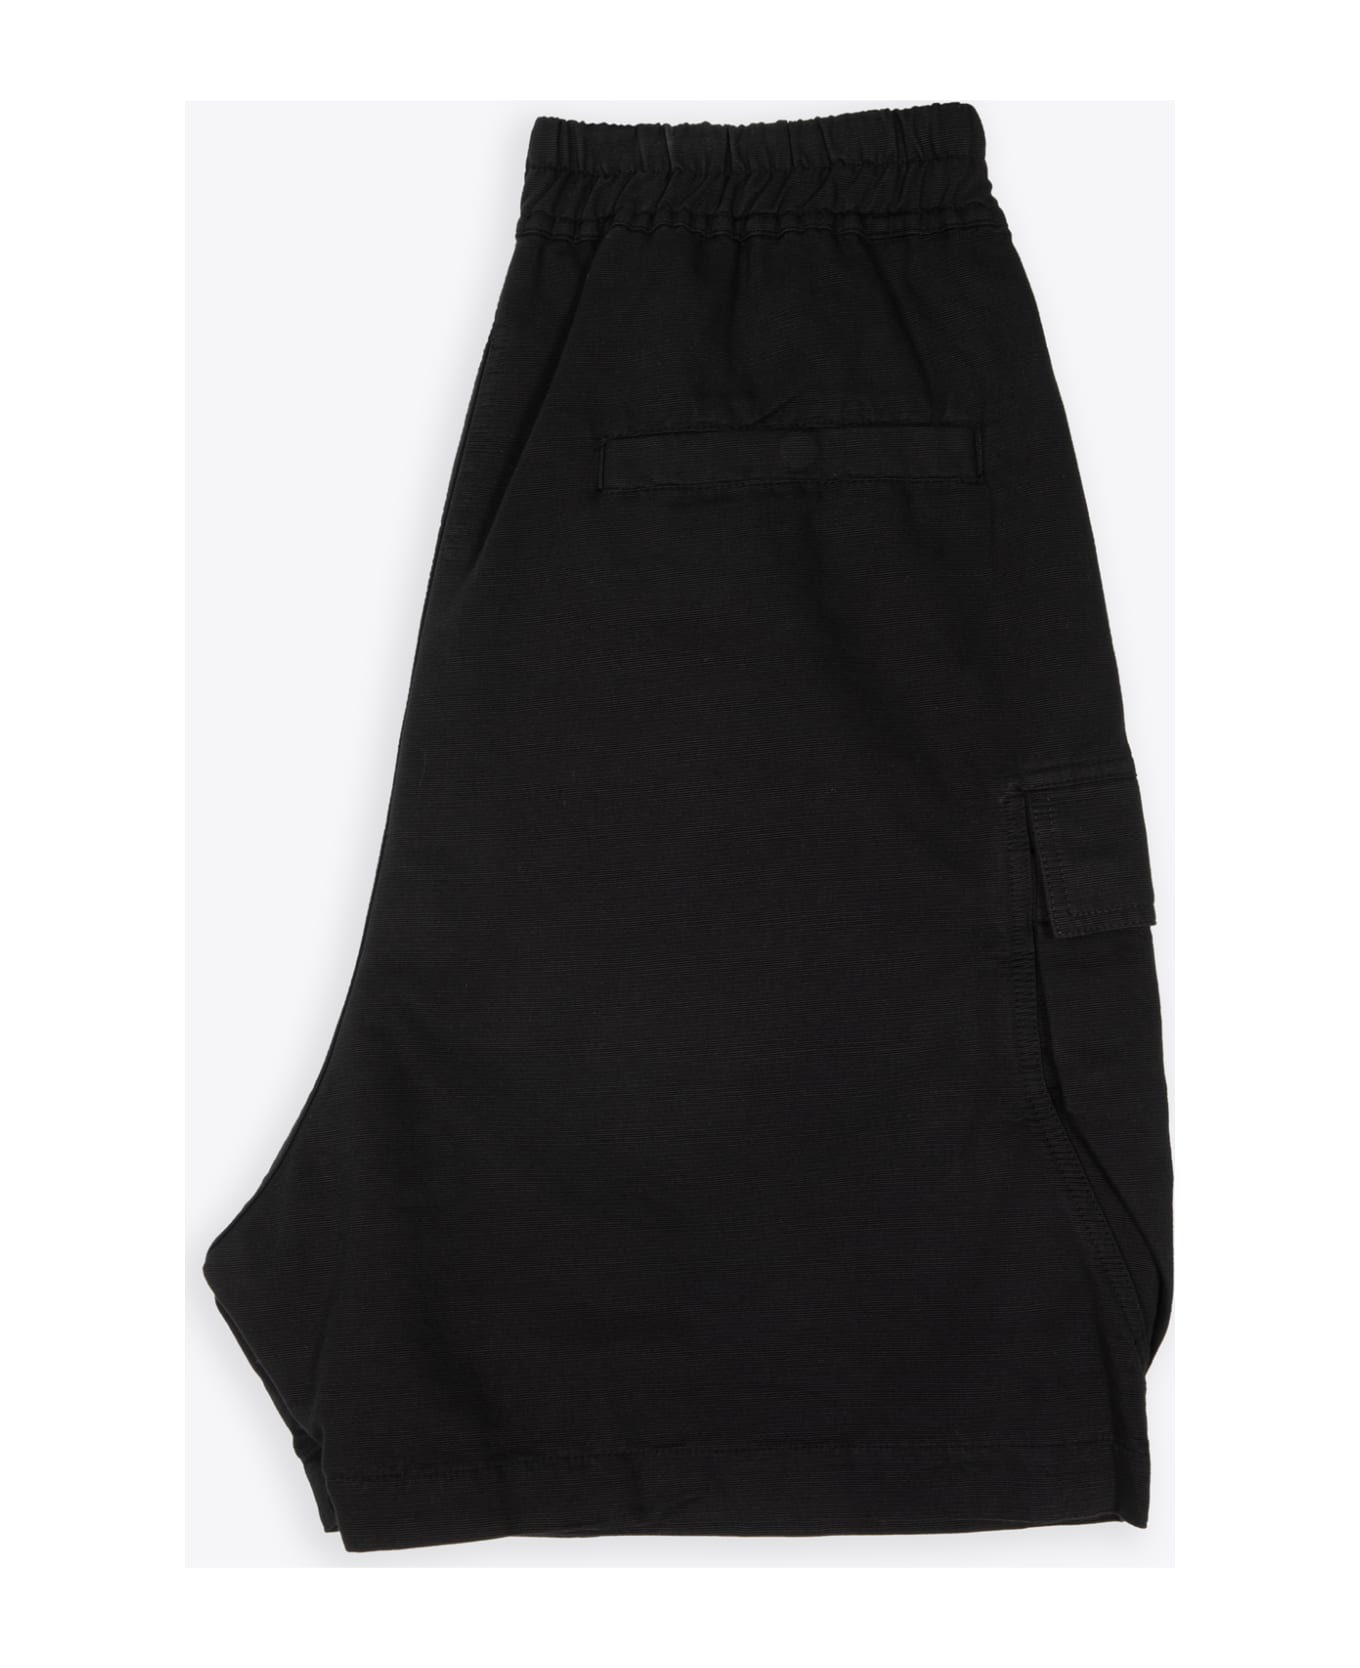 DRKSHDW Cargobela Shorts Black cotton baggy cargo shorts - Cargobela Shorts - Nero